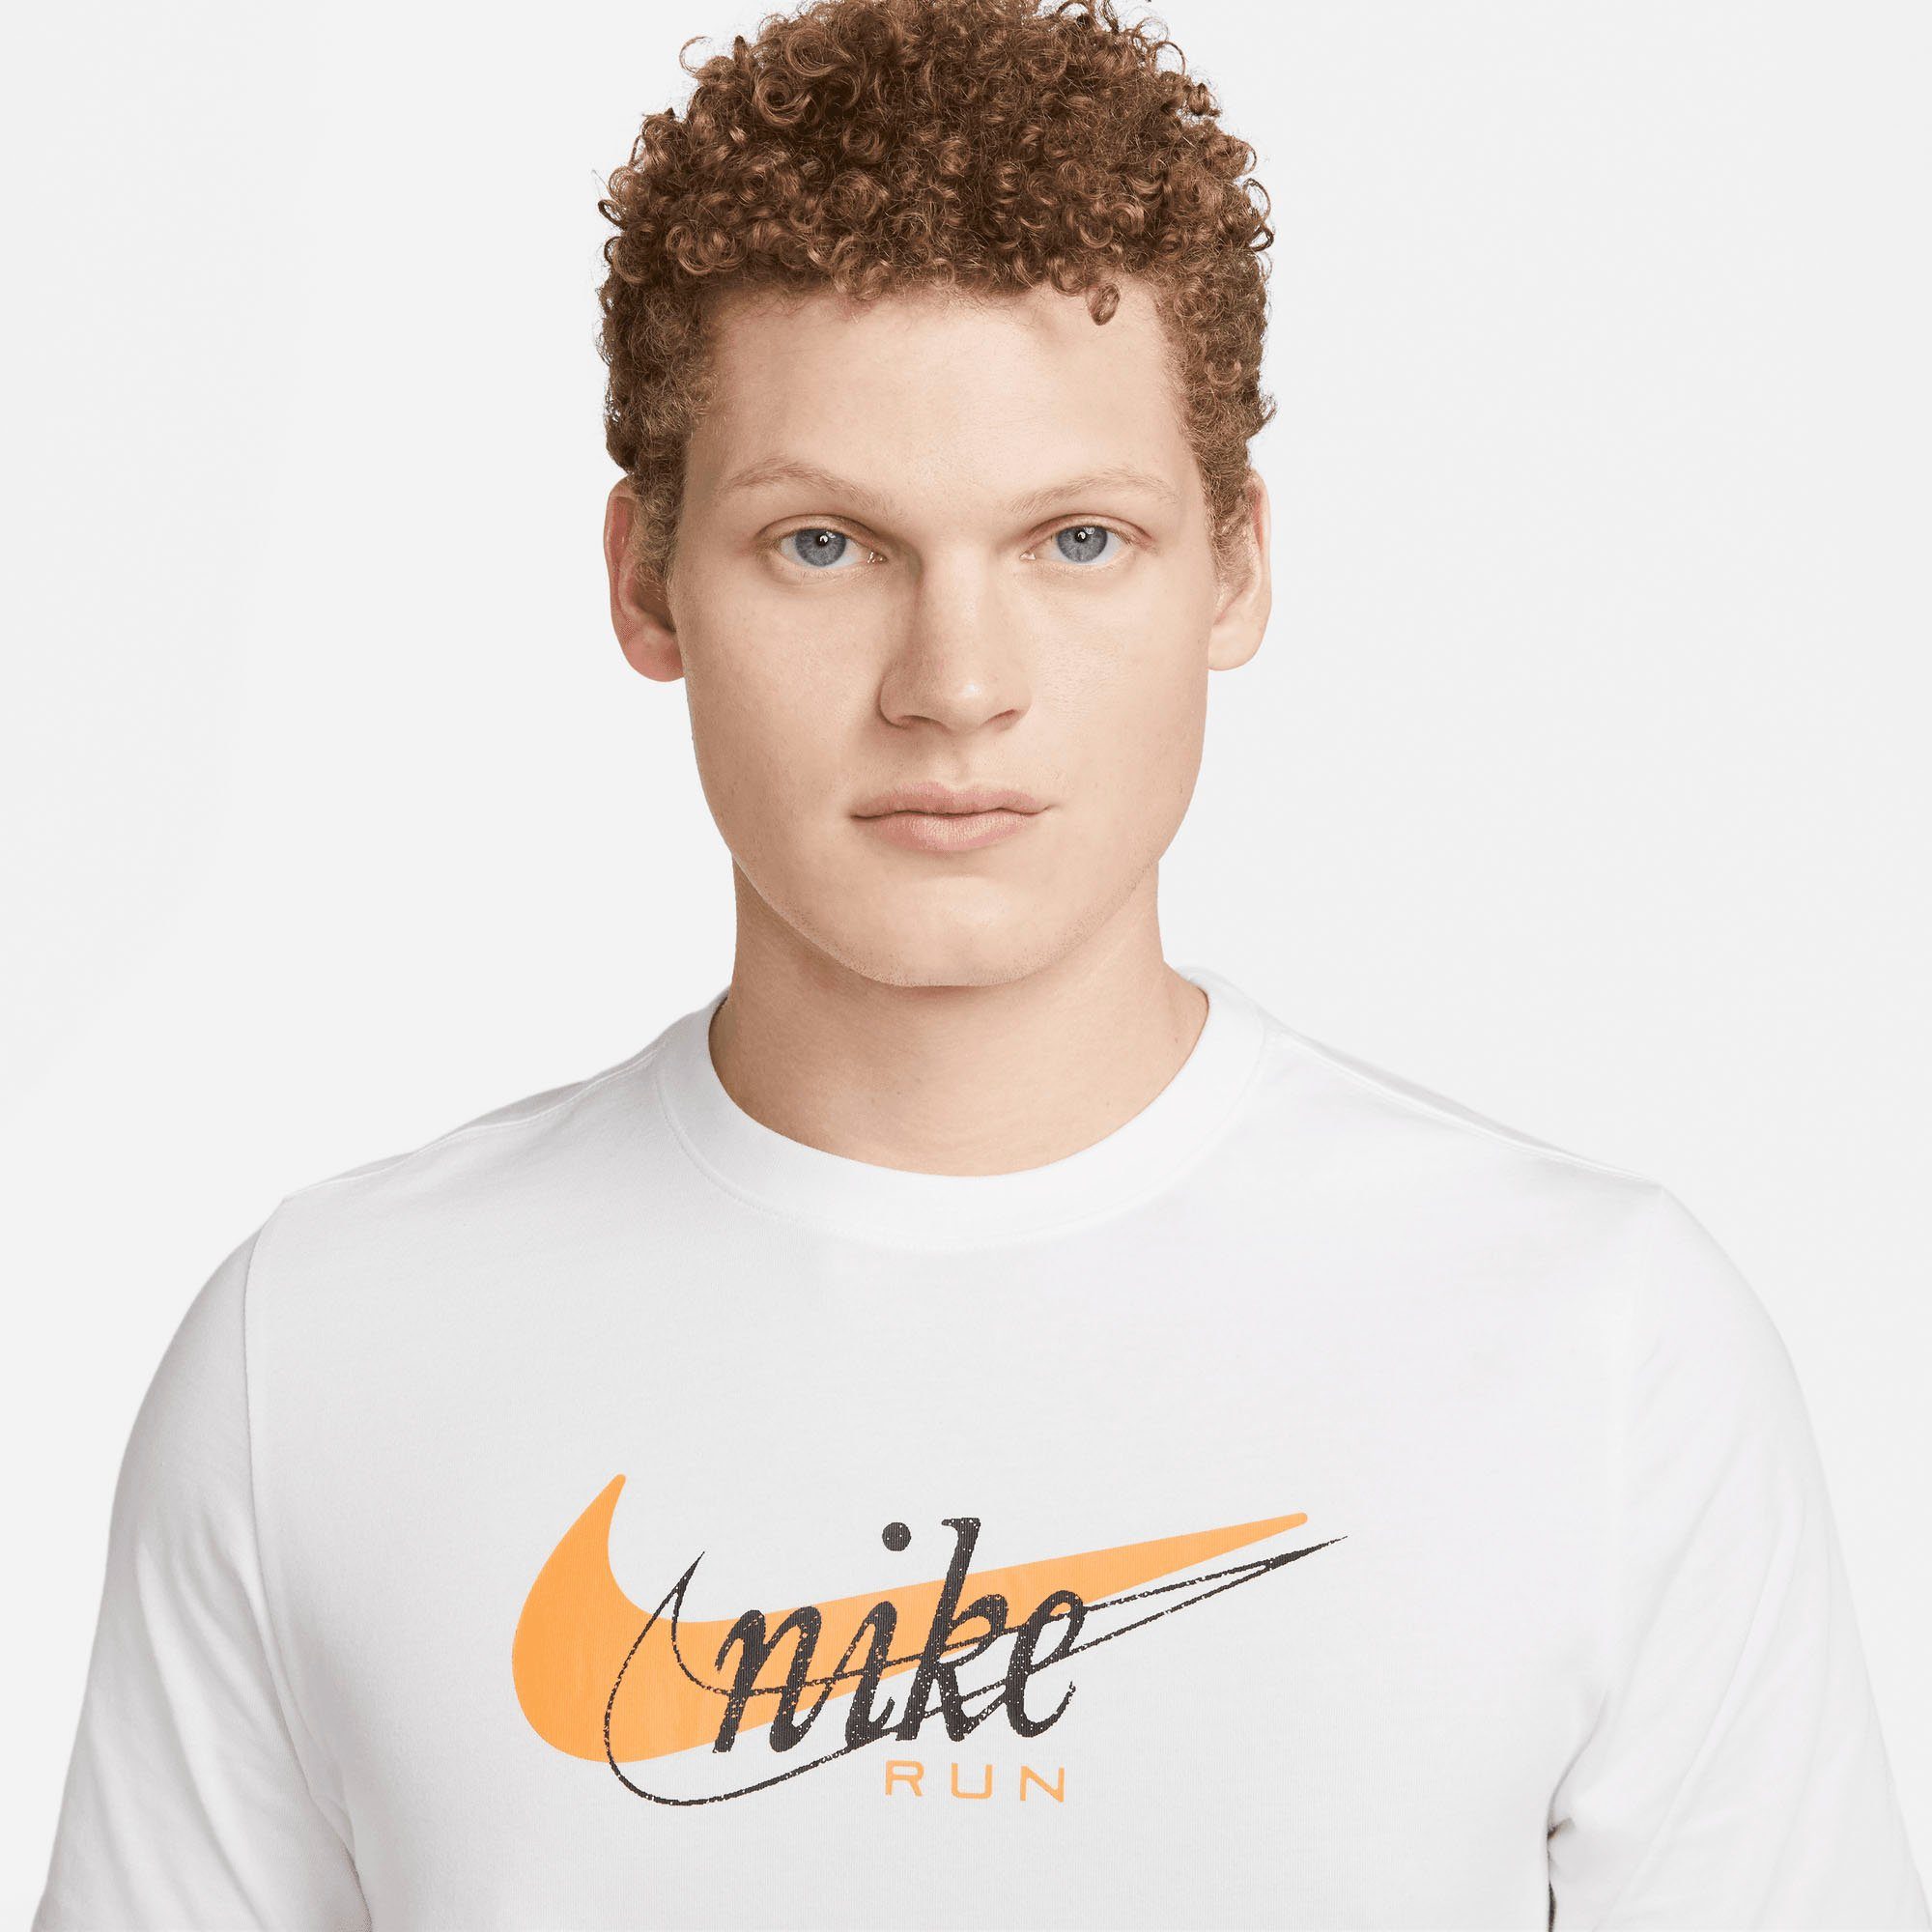 Nike Laufshirt Dri-FIT weiß Men's Running T-Shirt